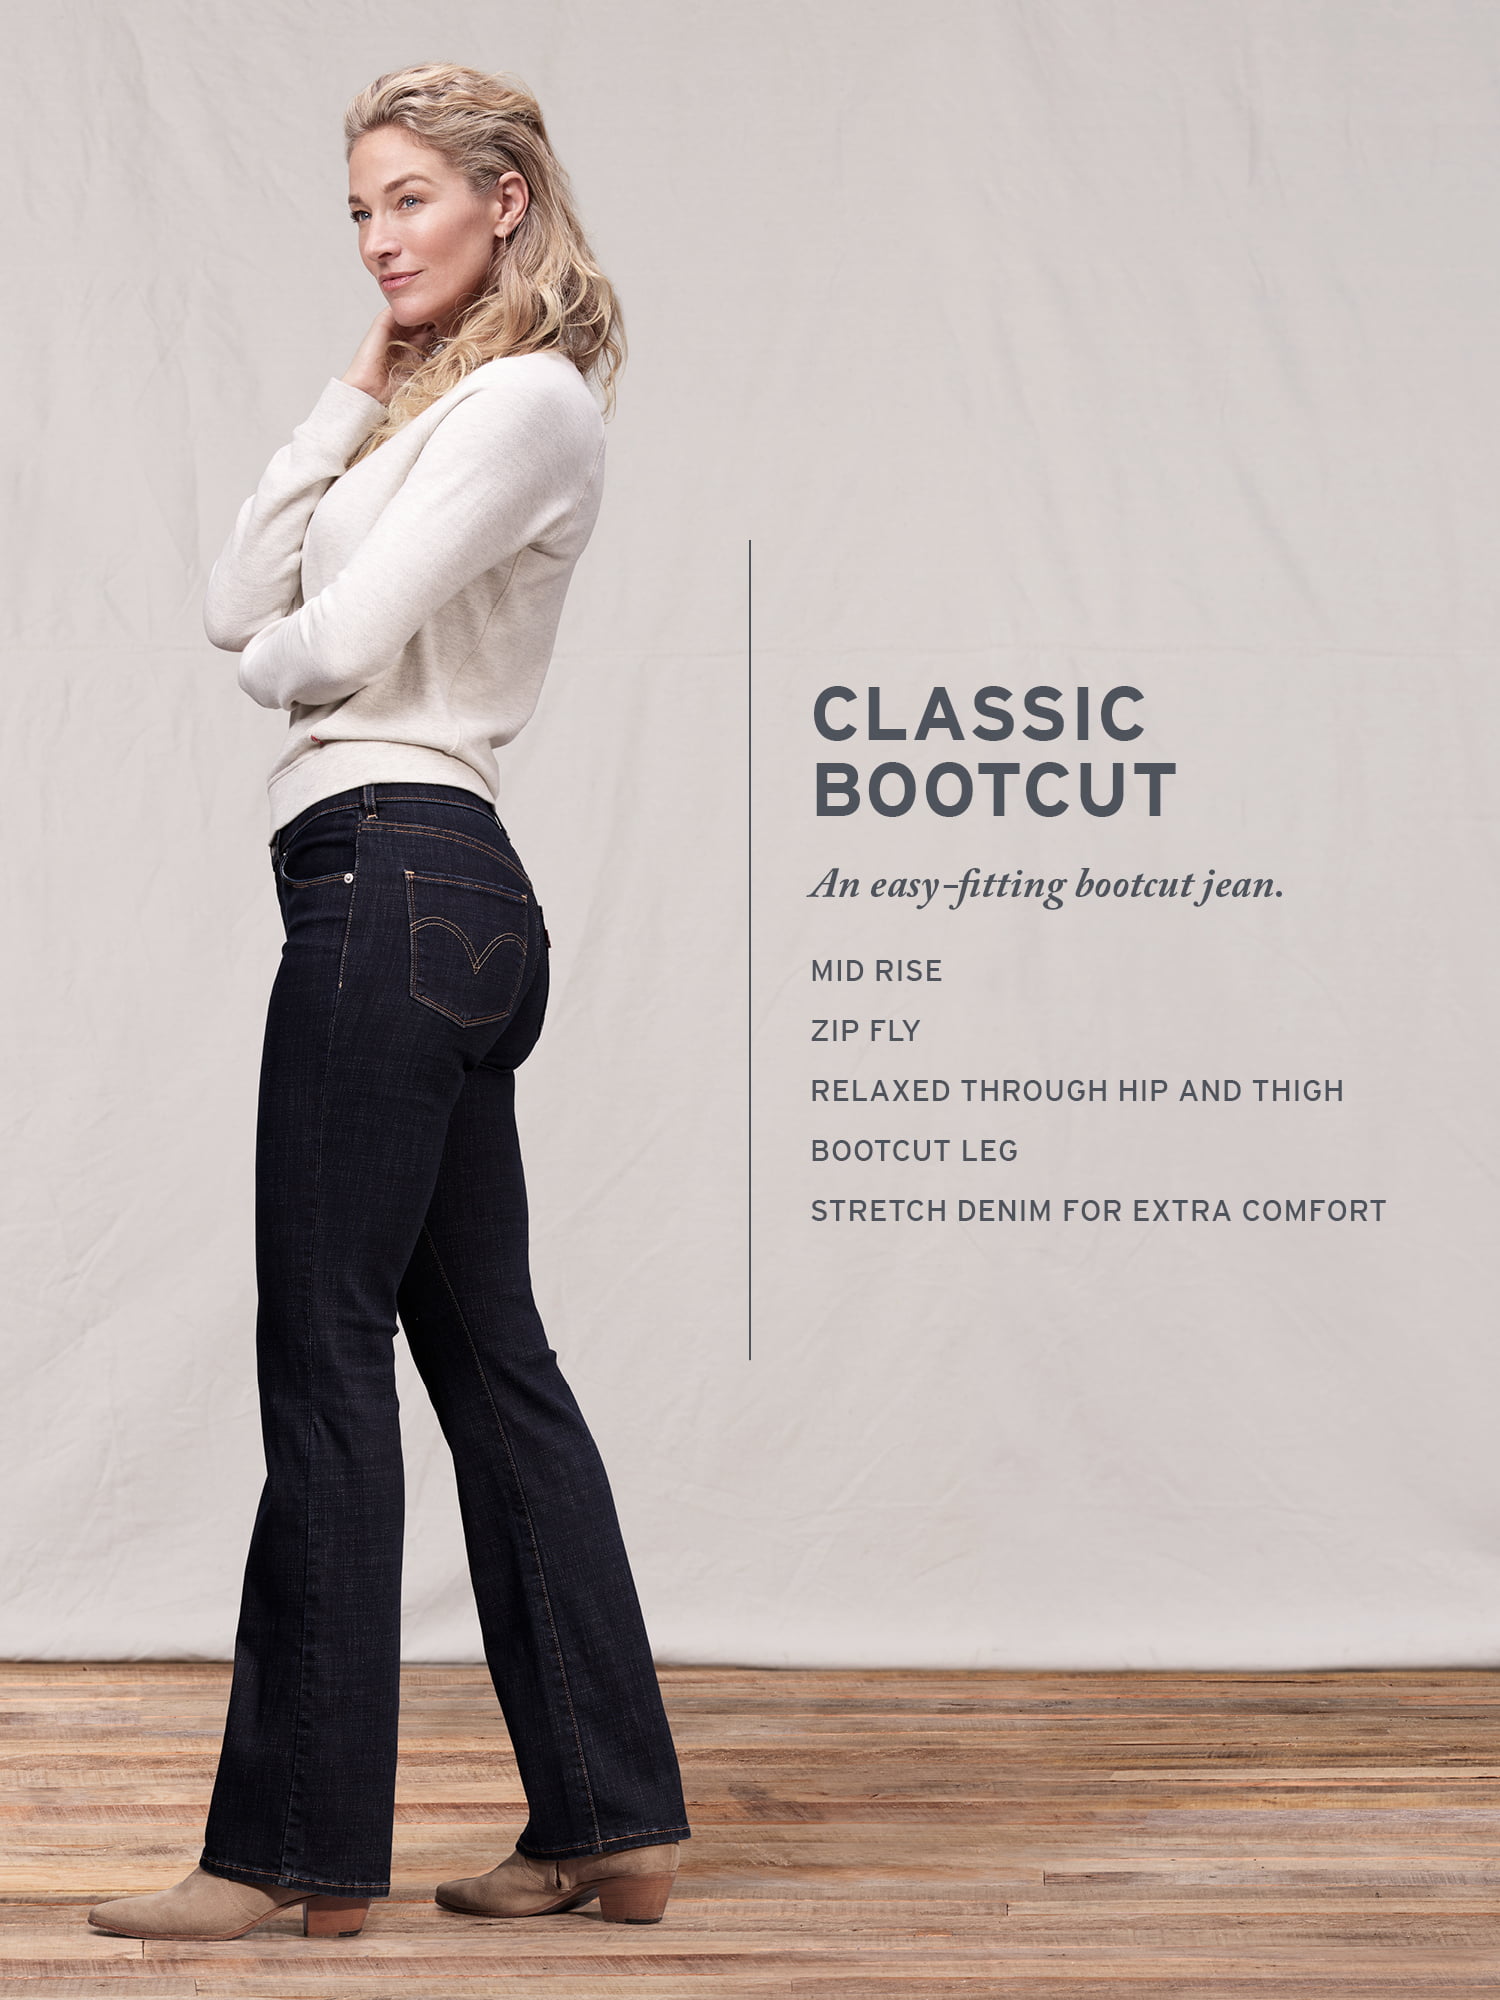 Levi's Original Red Tab Women's Classic Bootcut Jeans 